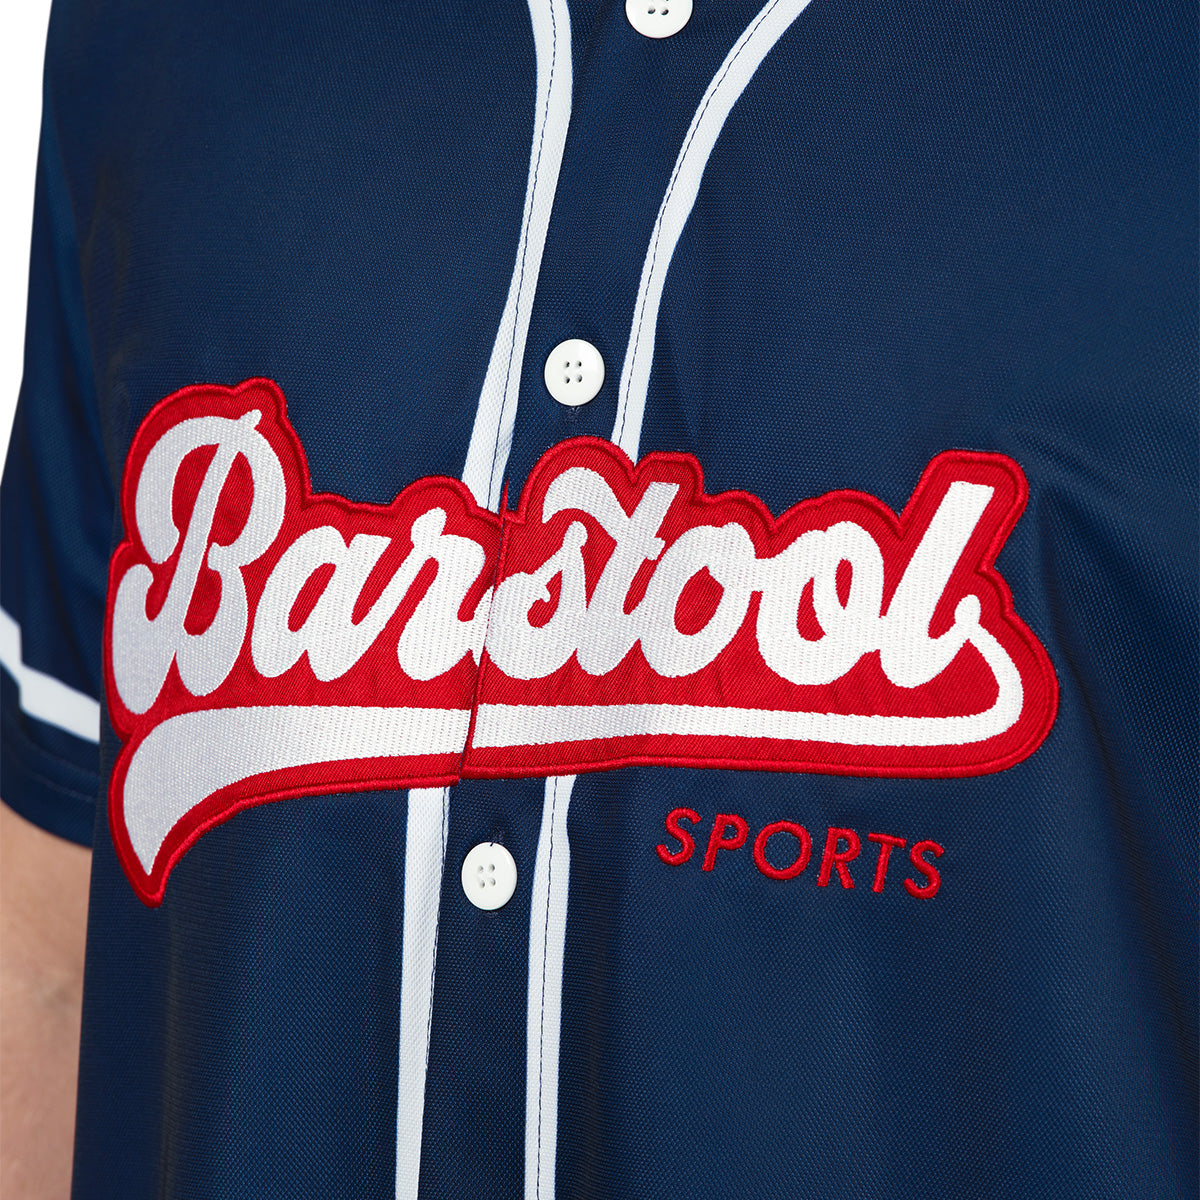 Barstool Sports Applique Baseball Jersey | Barstool Sports Navy